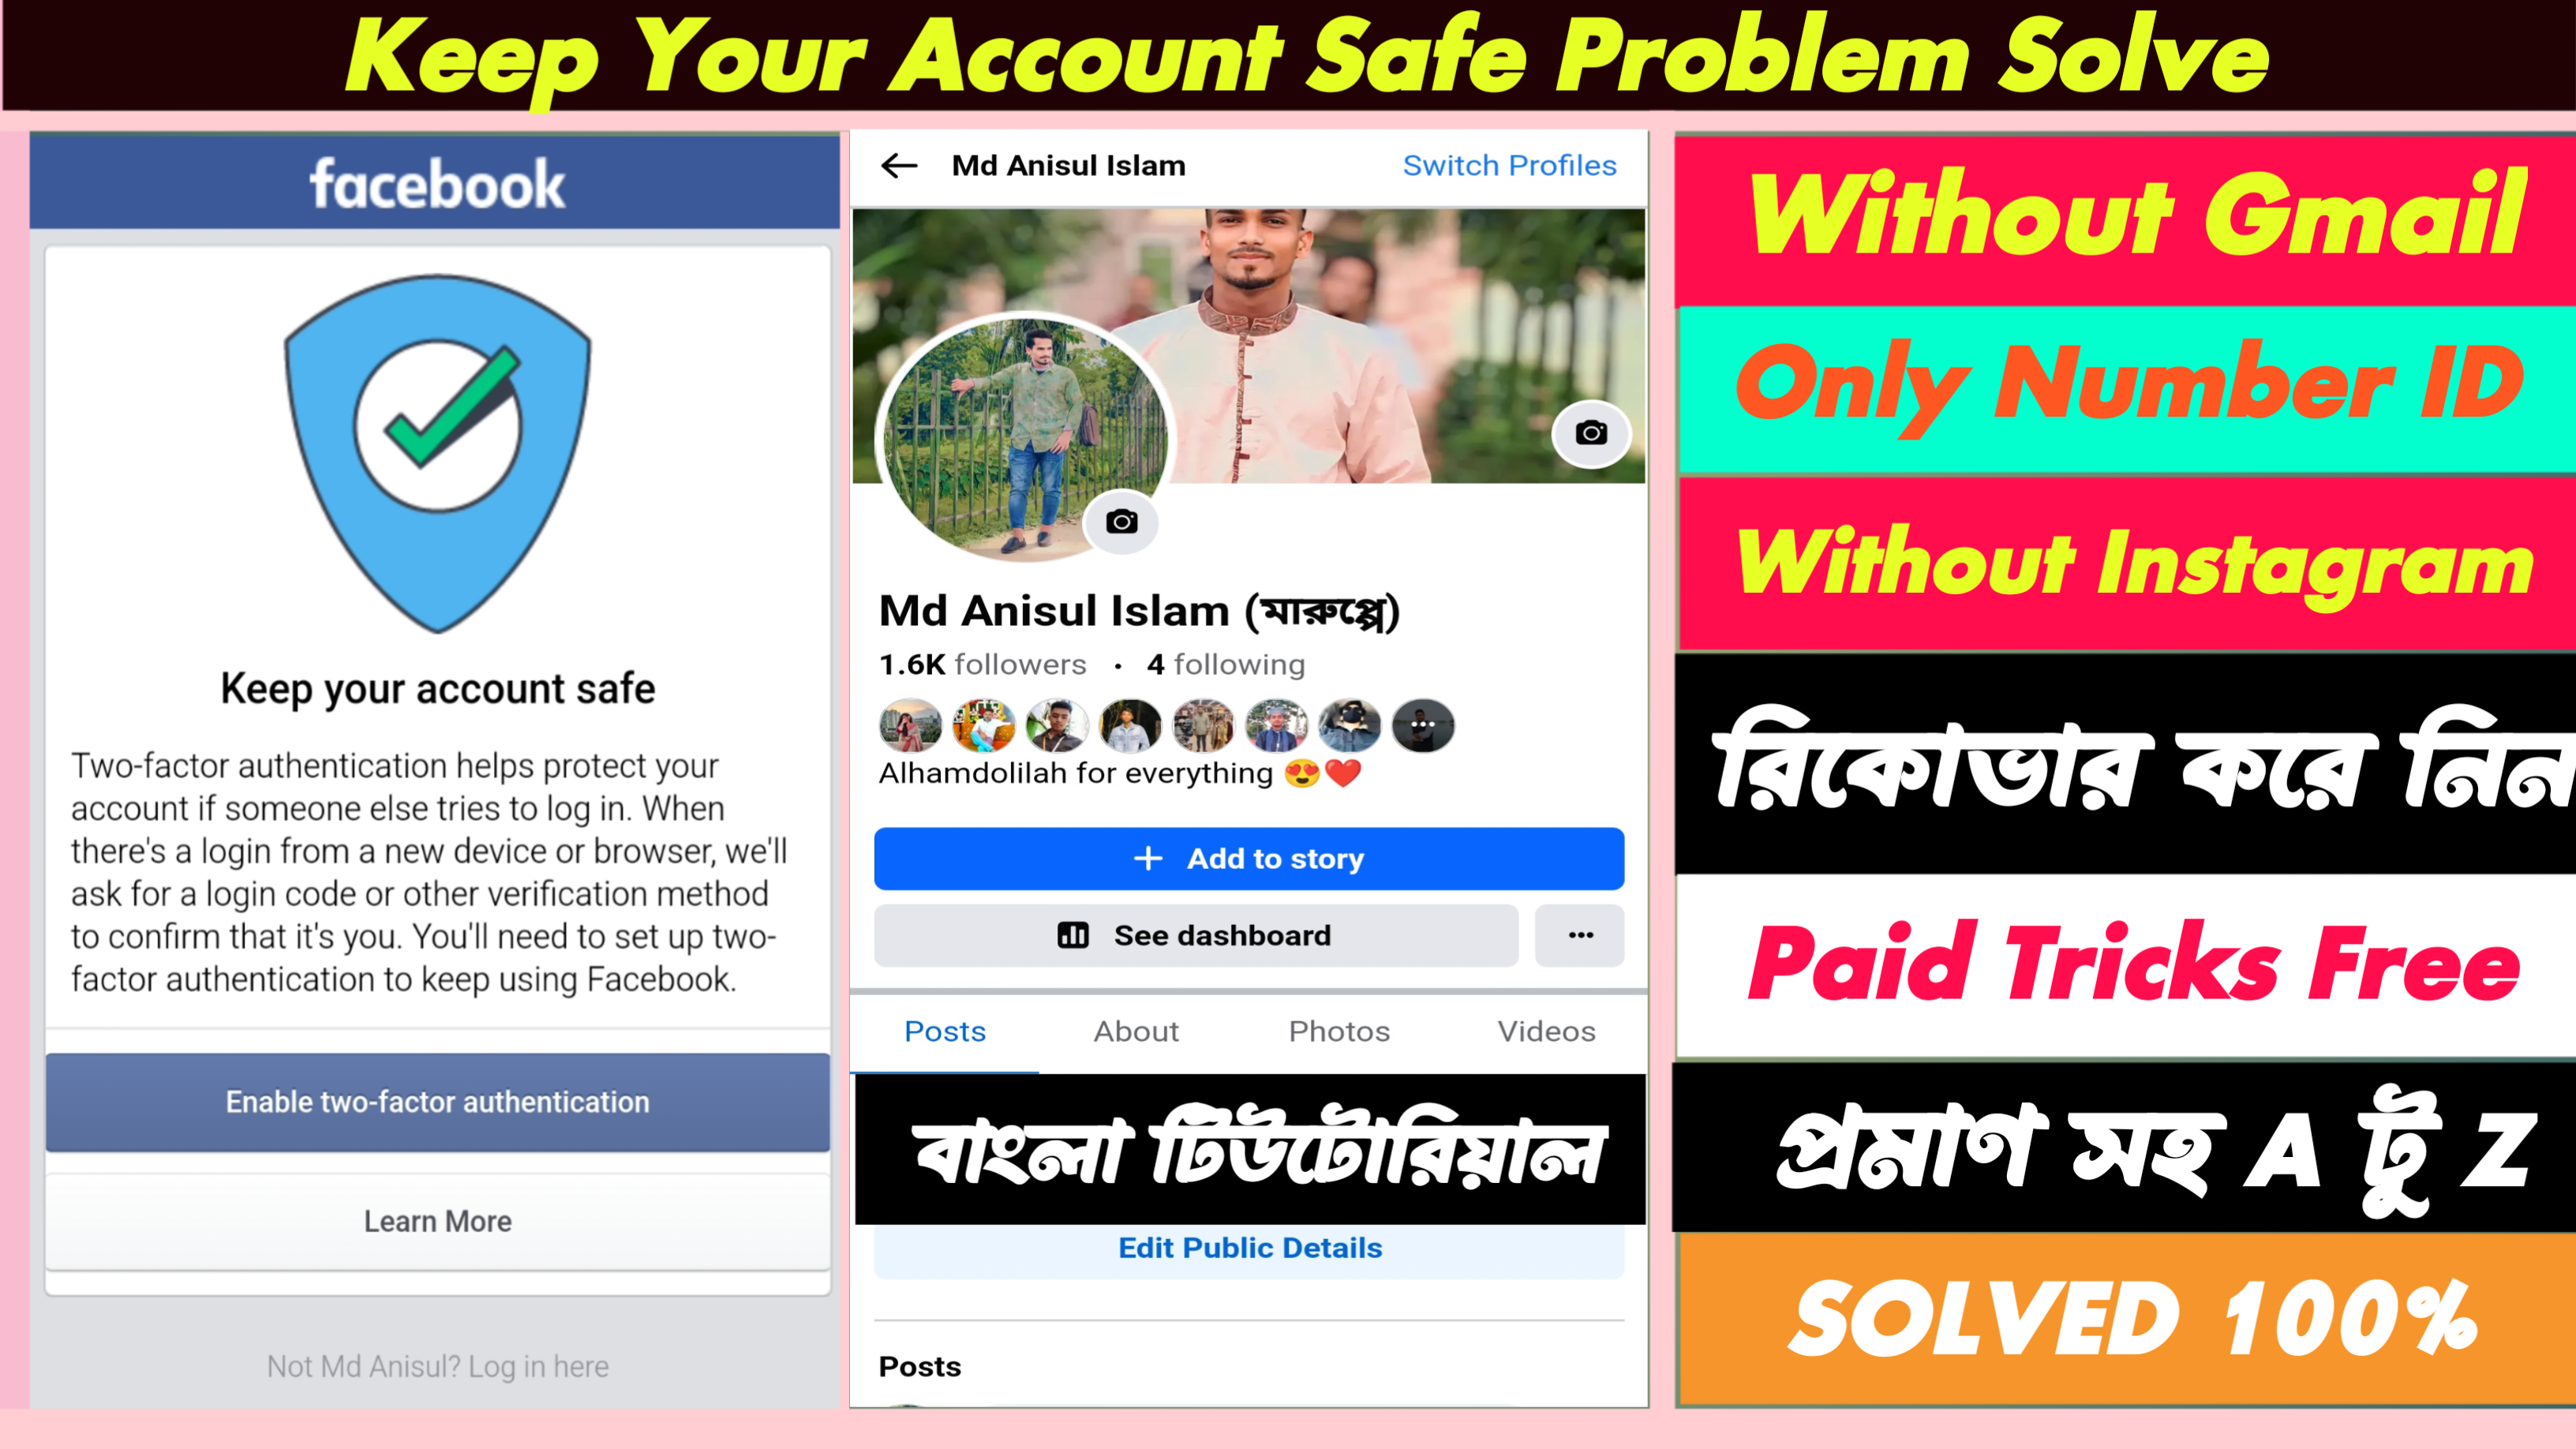 Two factor problem solve 2024 (? Ph Nb- 2024 ✅)| Keep your account safe facebook problem solved 2024 পেইড ট্রিক্স ফ্রী ?